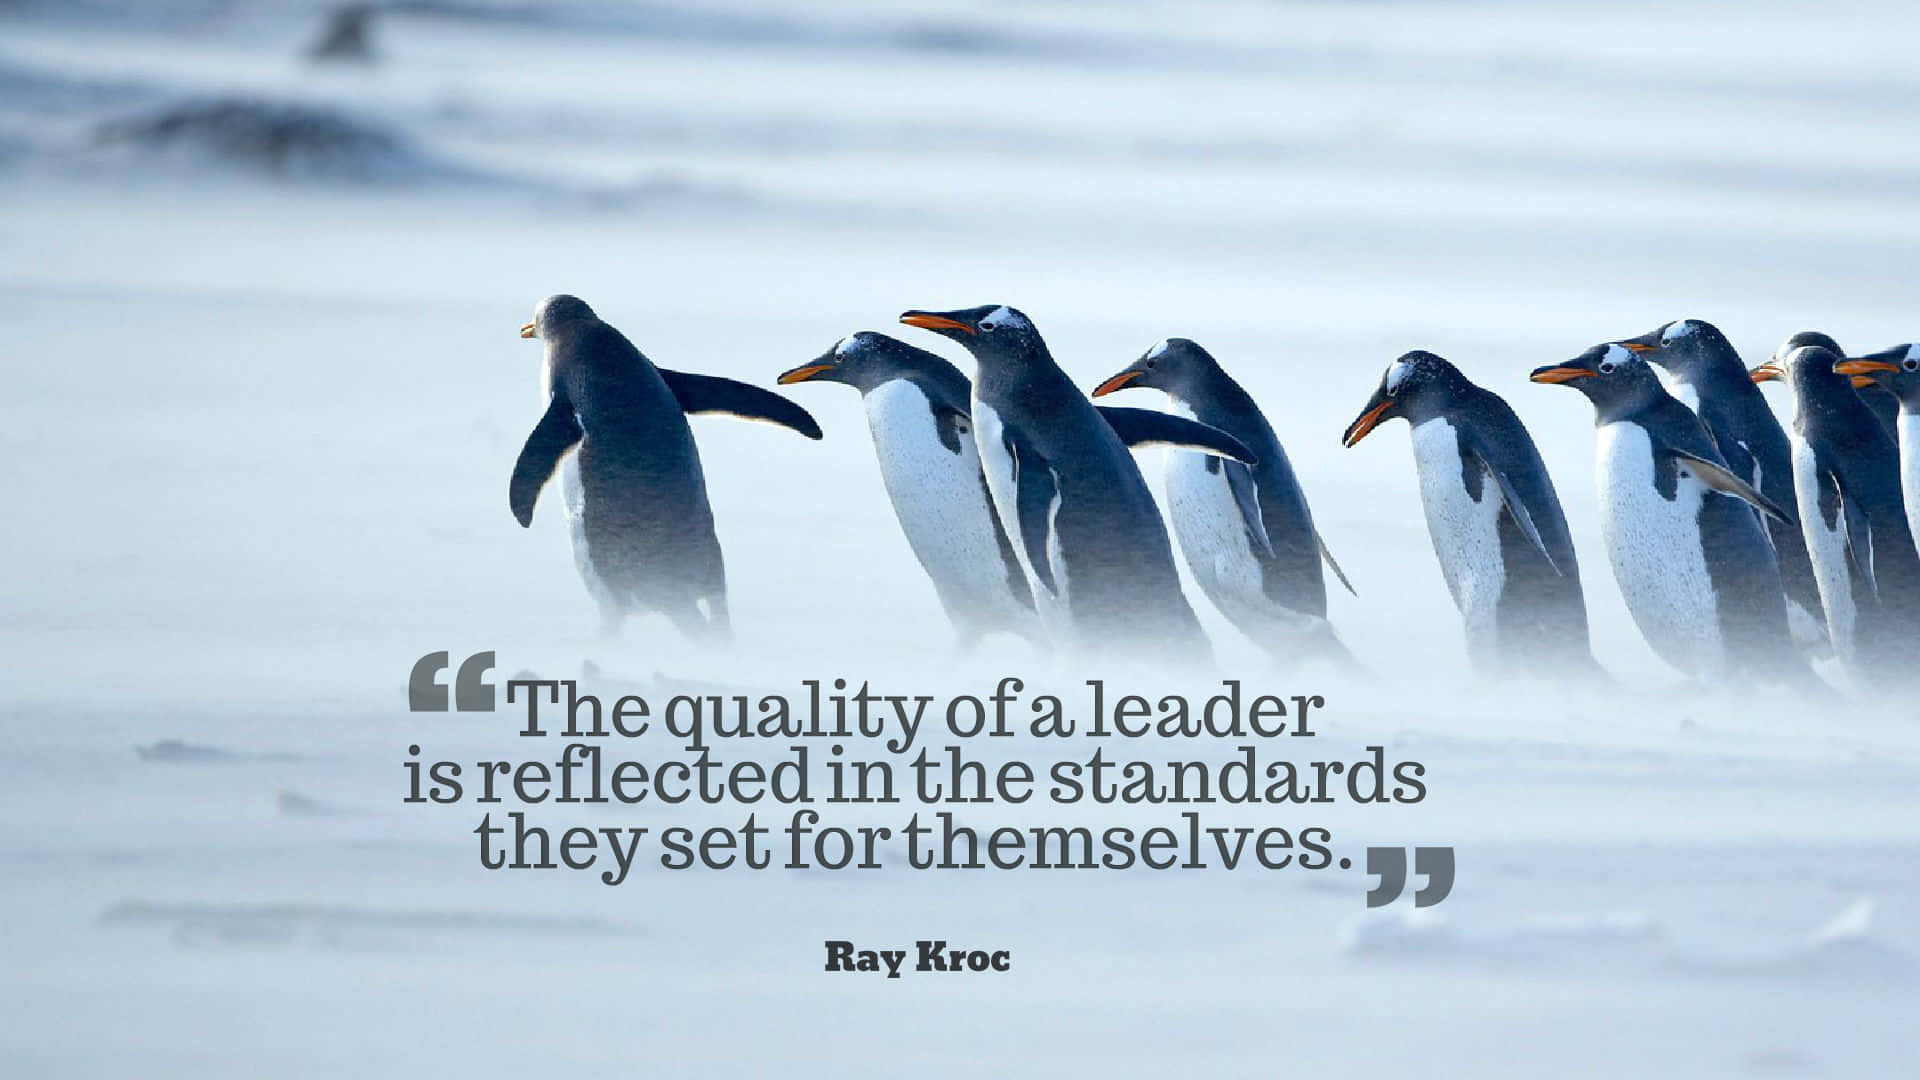 Leadership Standards Quote Penguins Wallpaper